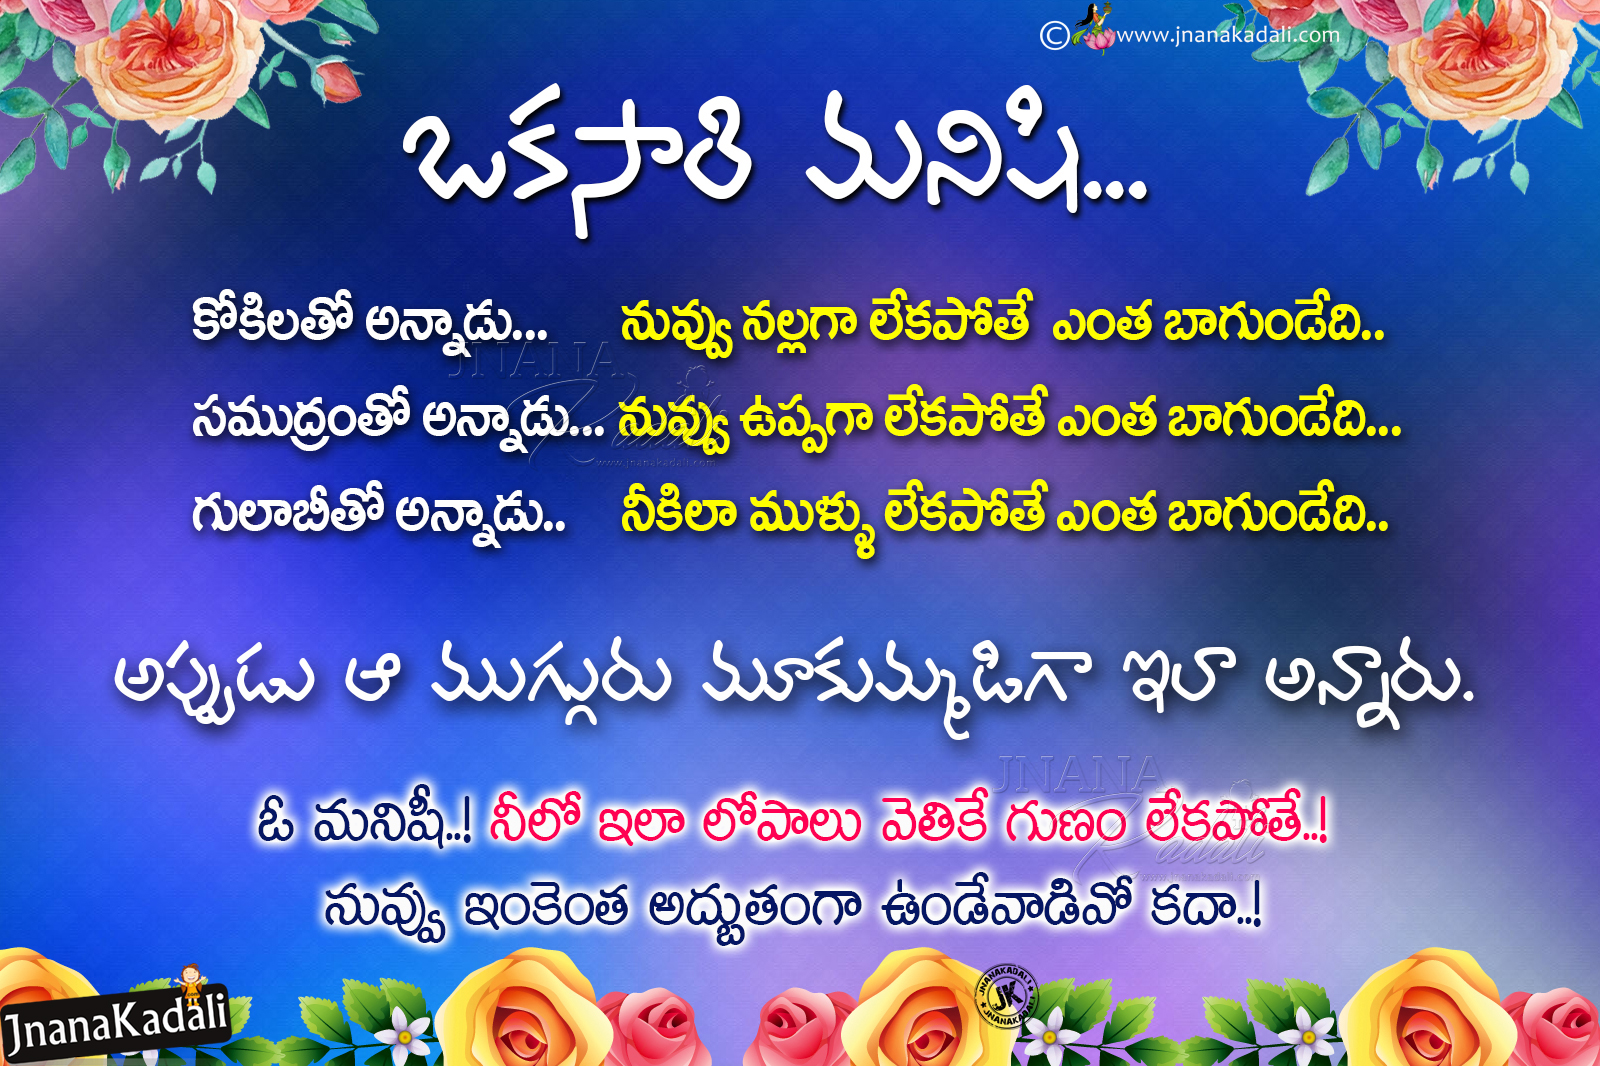 Beautiful Telugu Life Quotes-Best words for life success in Telugu ...